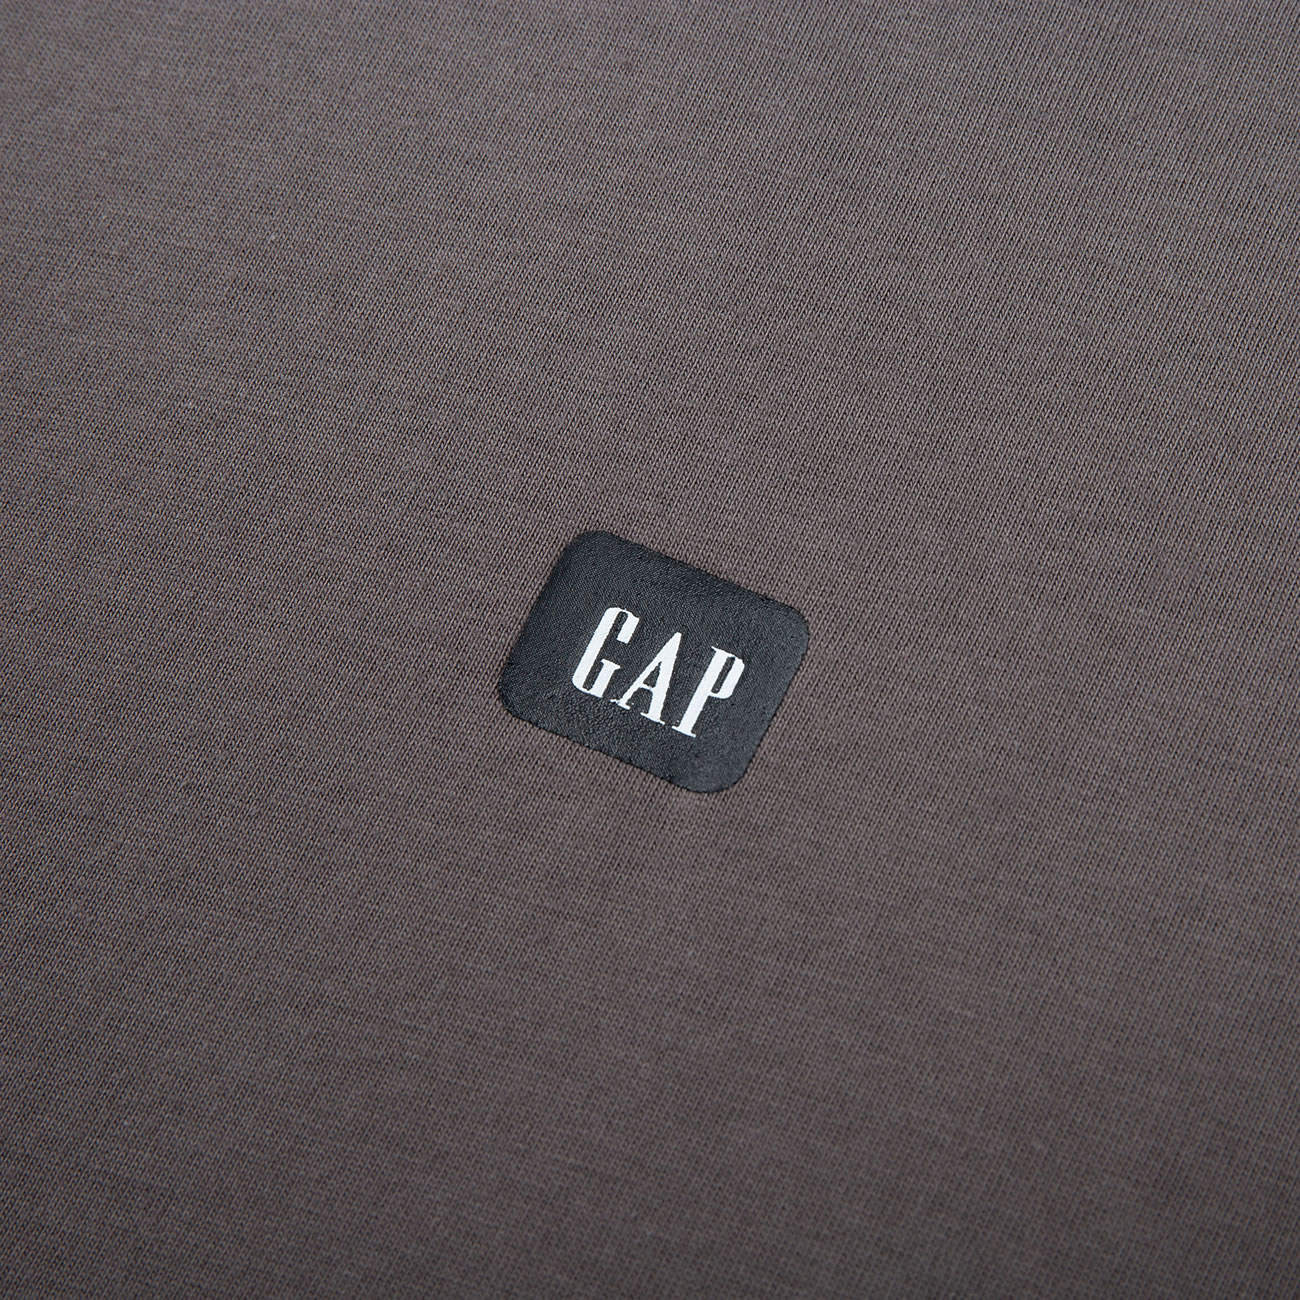 Kanye New T Shirts For Sale Grey (4) - newkick.org